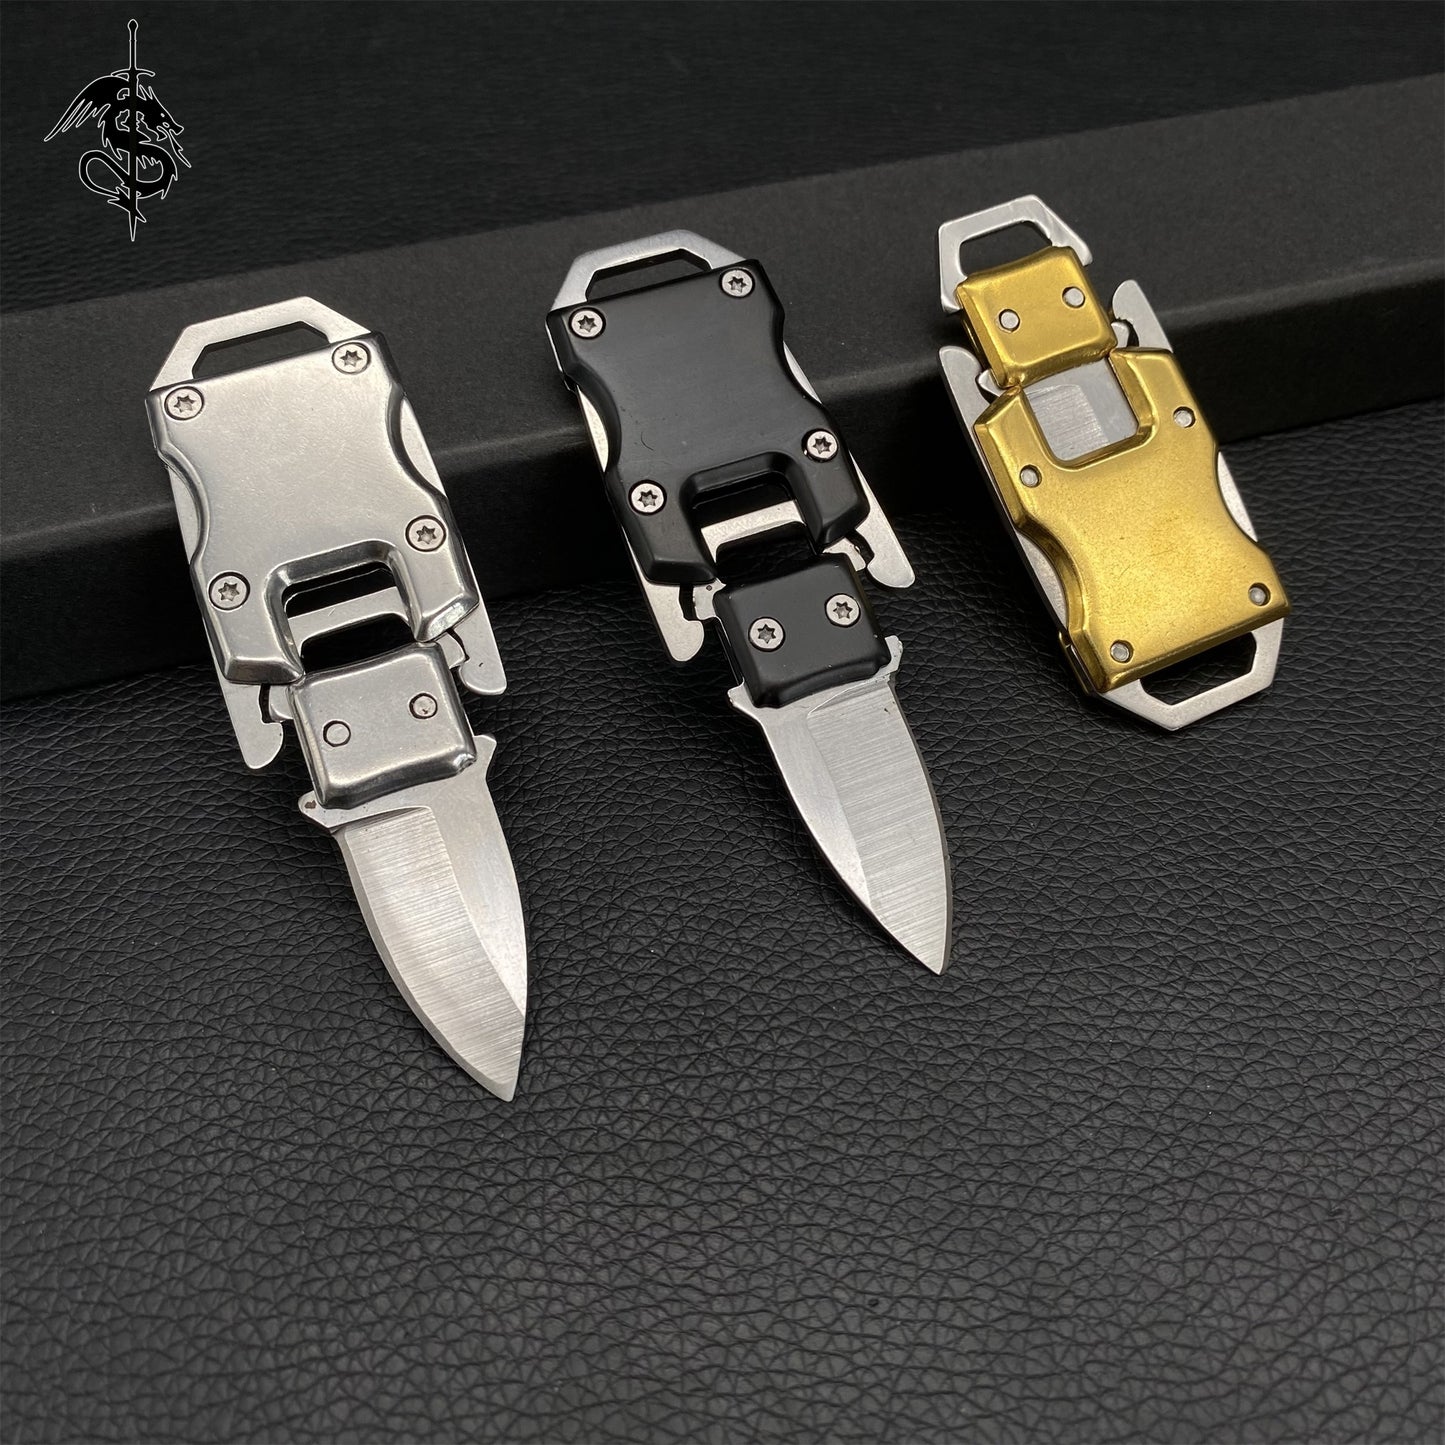 Transformers Keychain Portable Knife EDC Sharp Steel Tool Knife